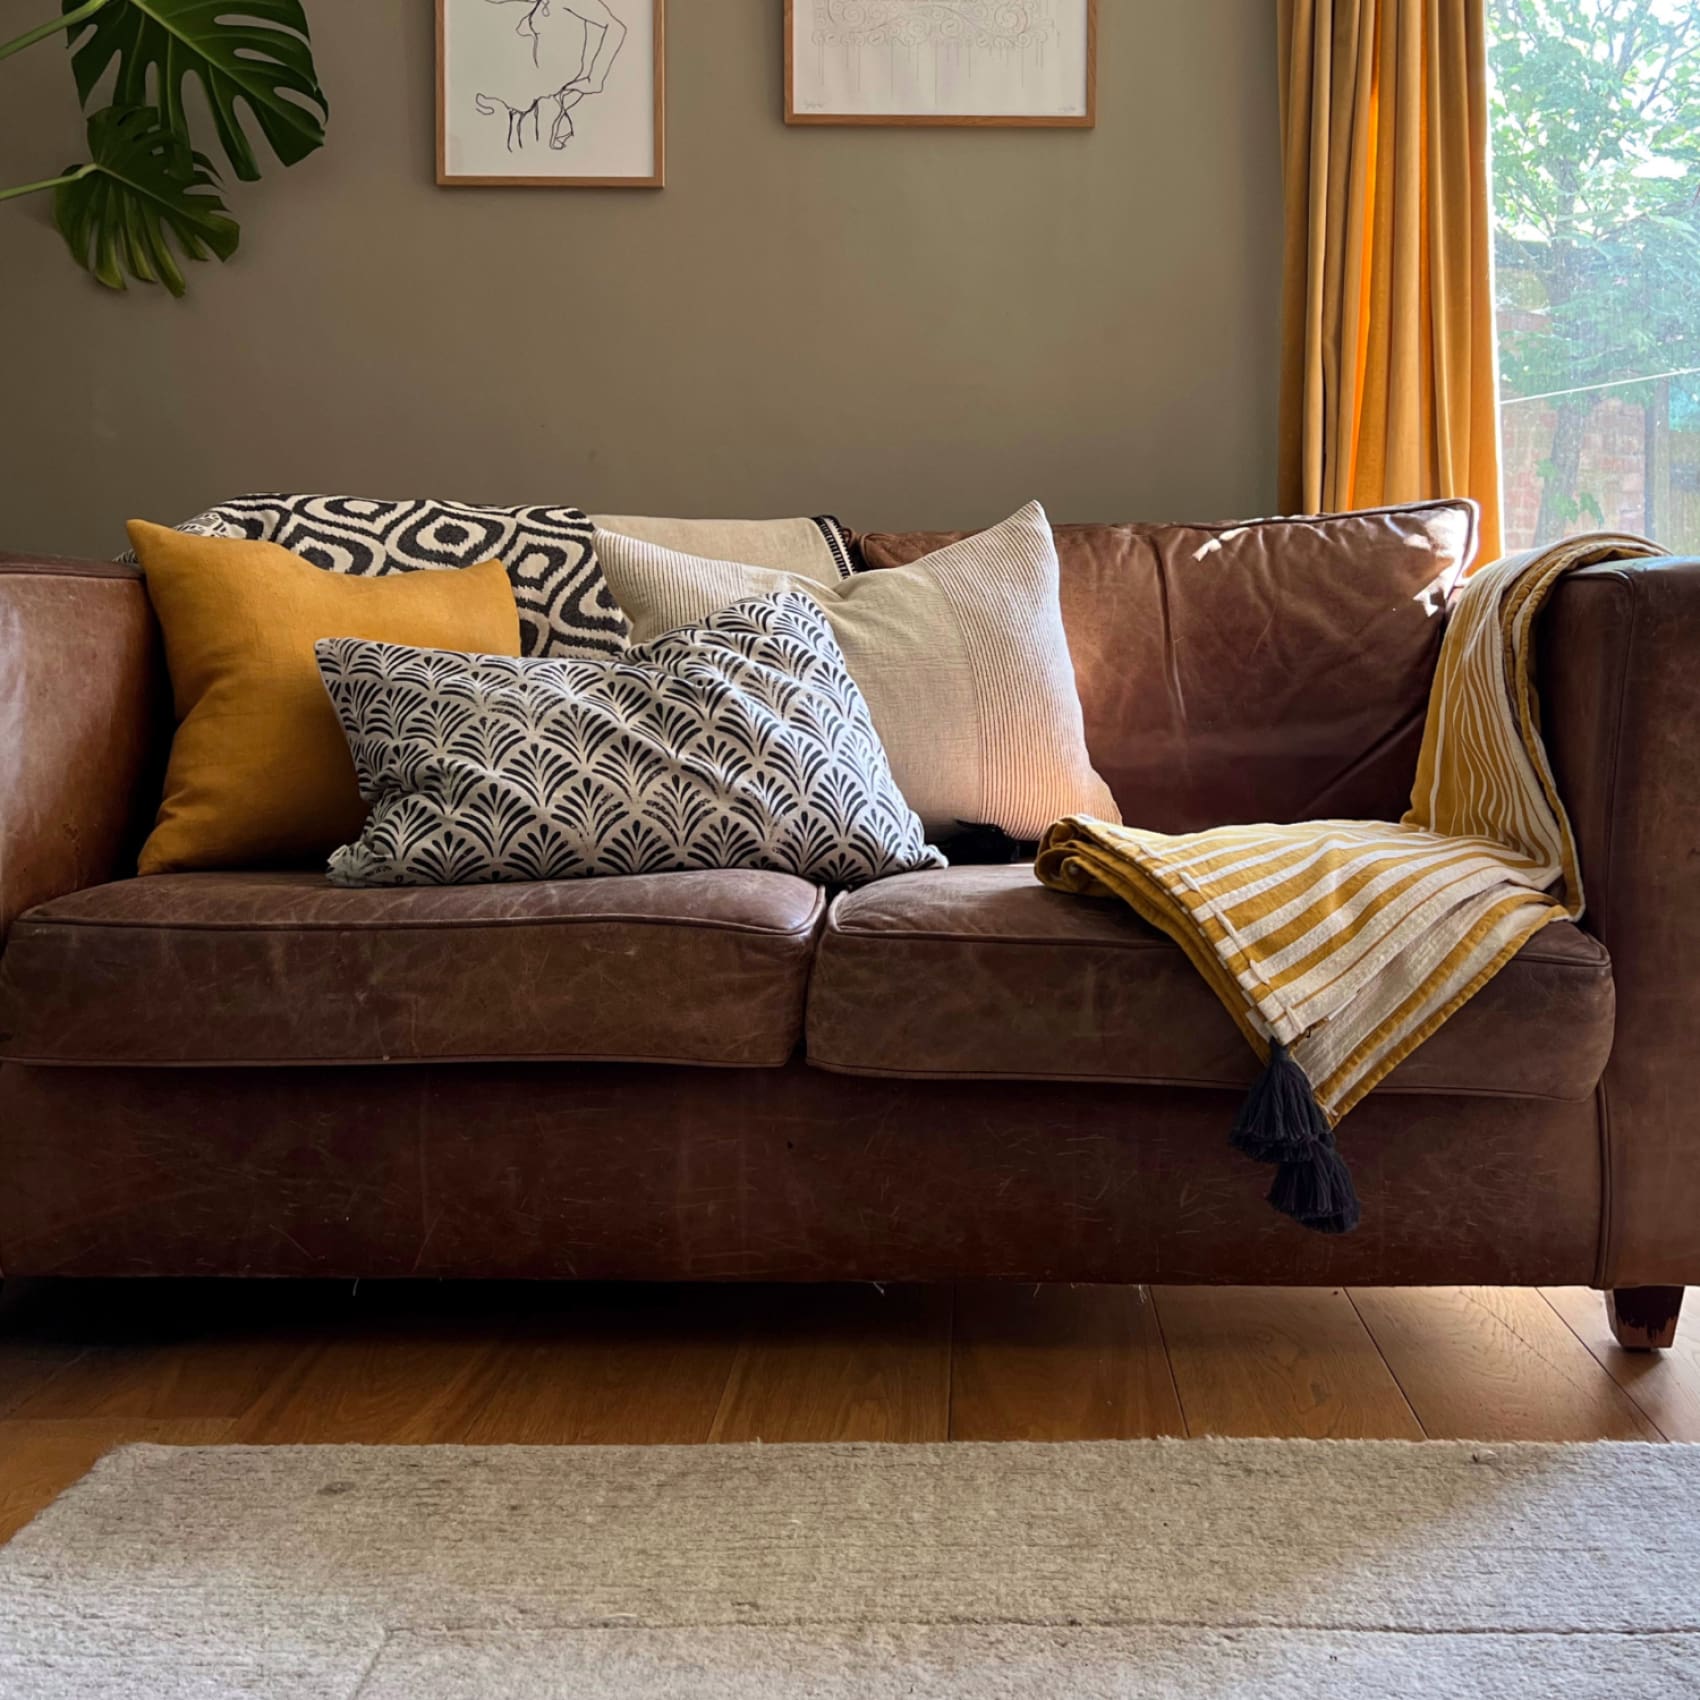 yatak-organic-cotton-blanket-in-ochre-cream-black-ecru-jacquard-blankets-luks-linen-brown-couch-furniture-285.jpg